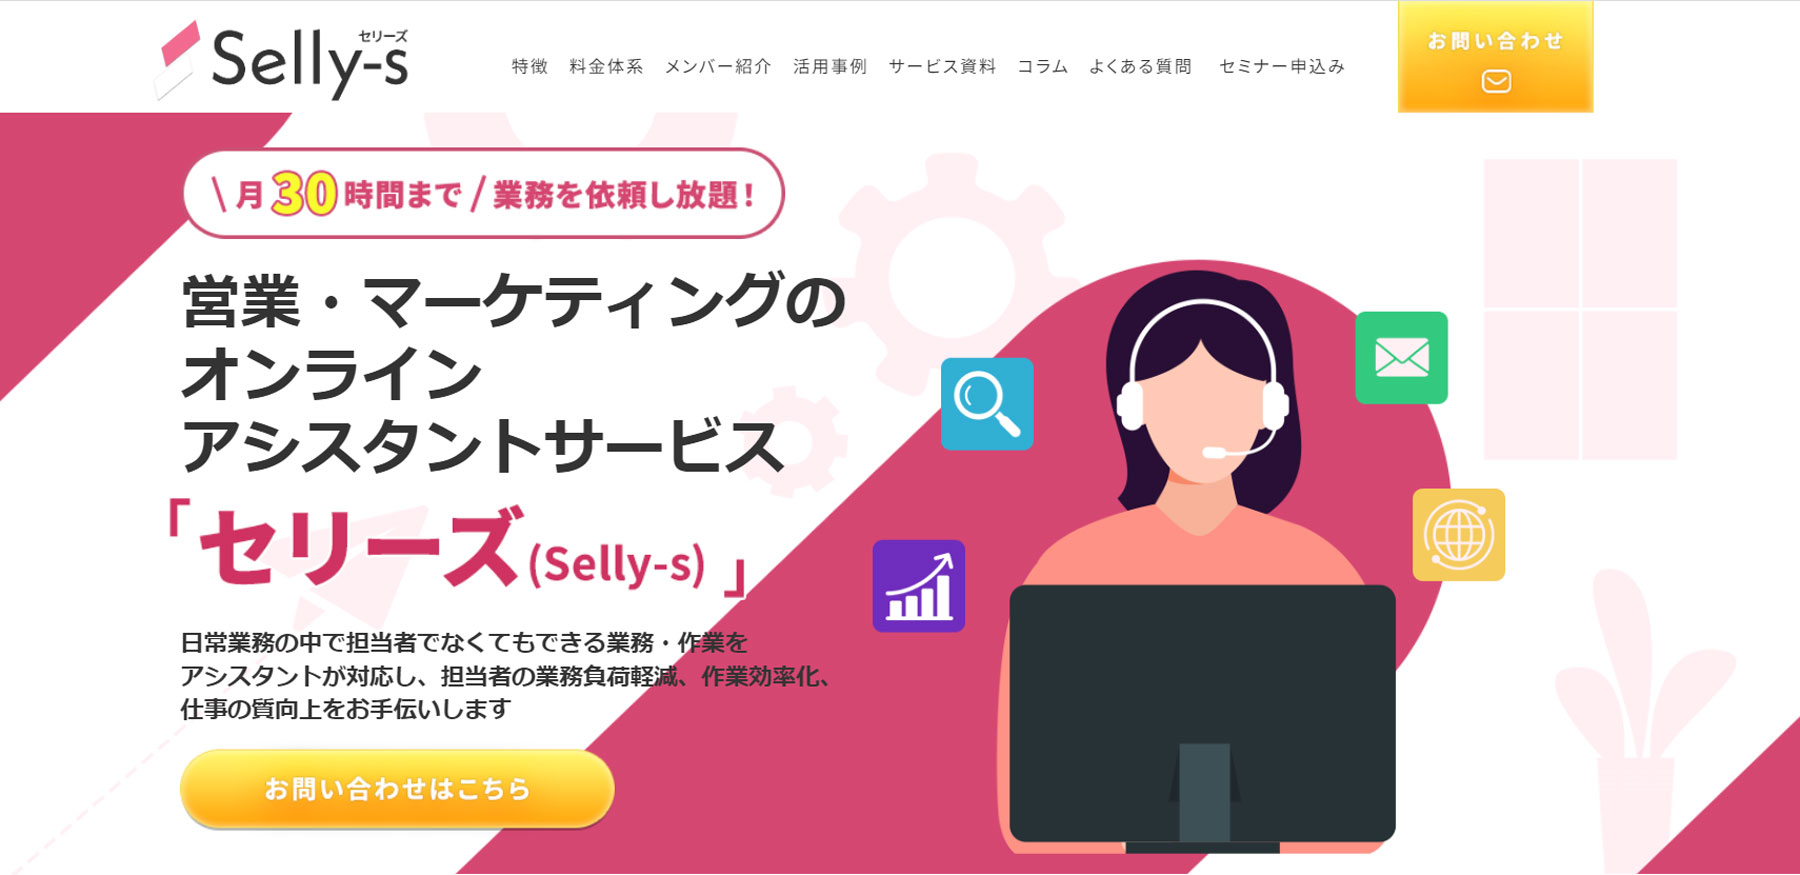 Slley-s公式Webサイト